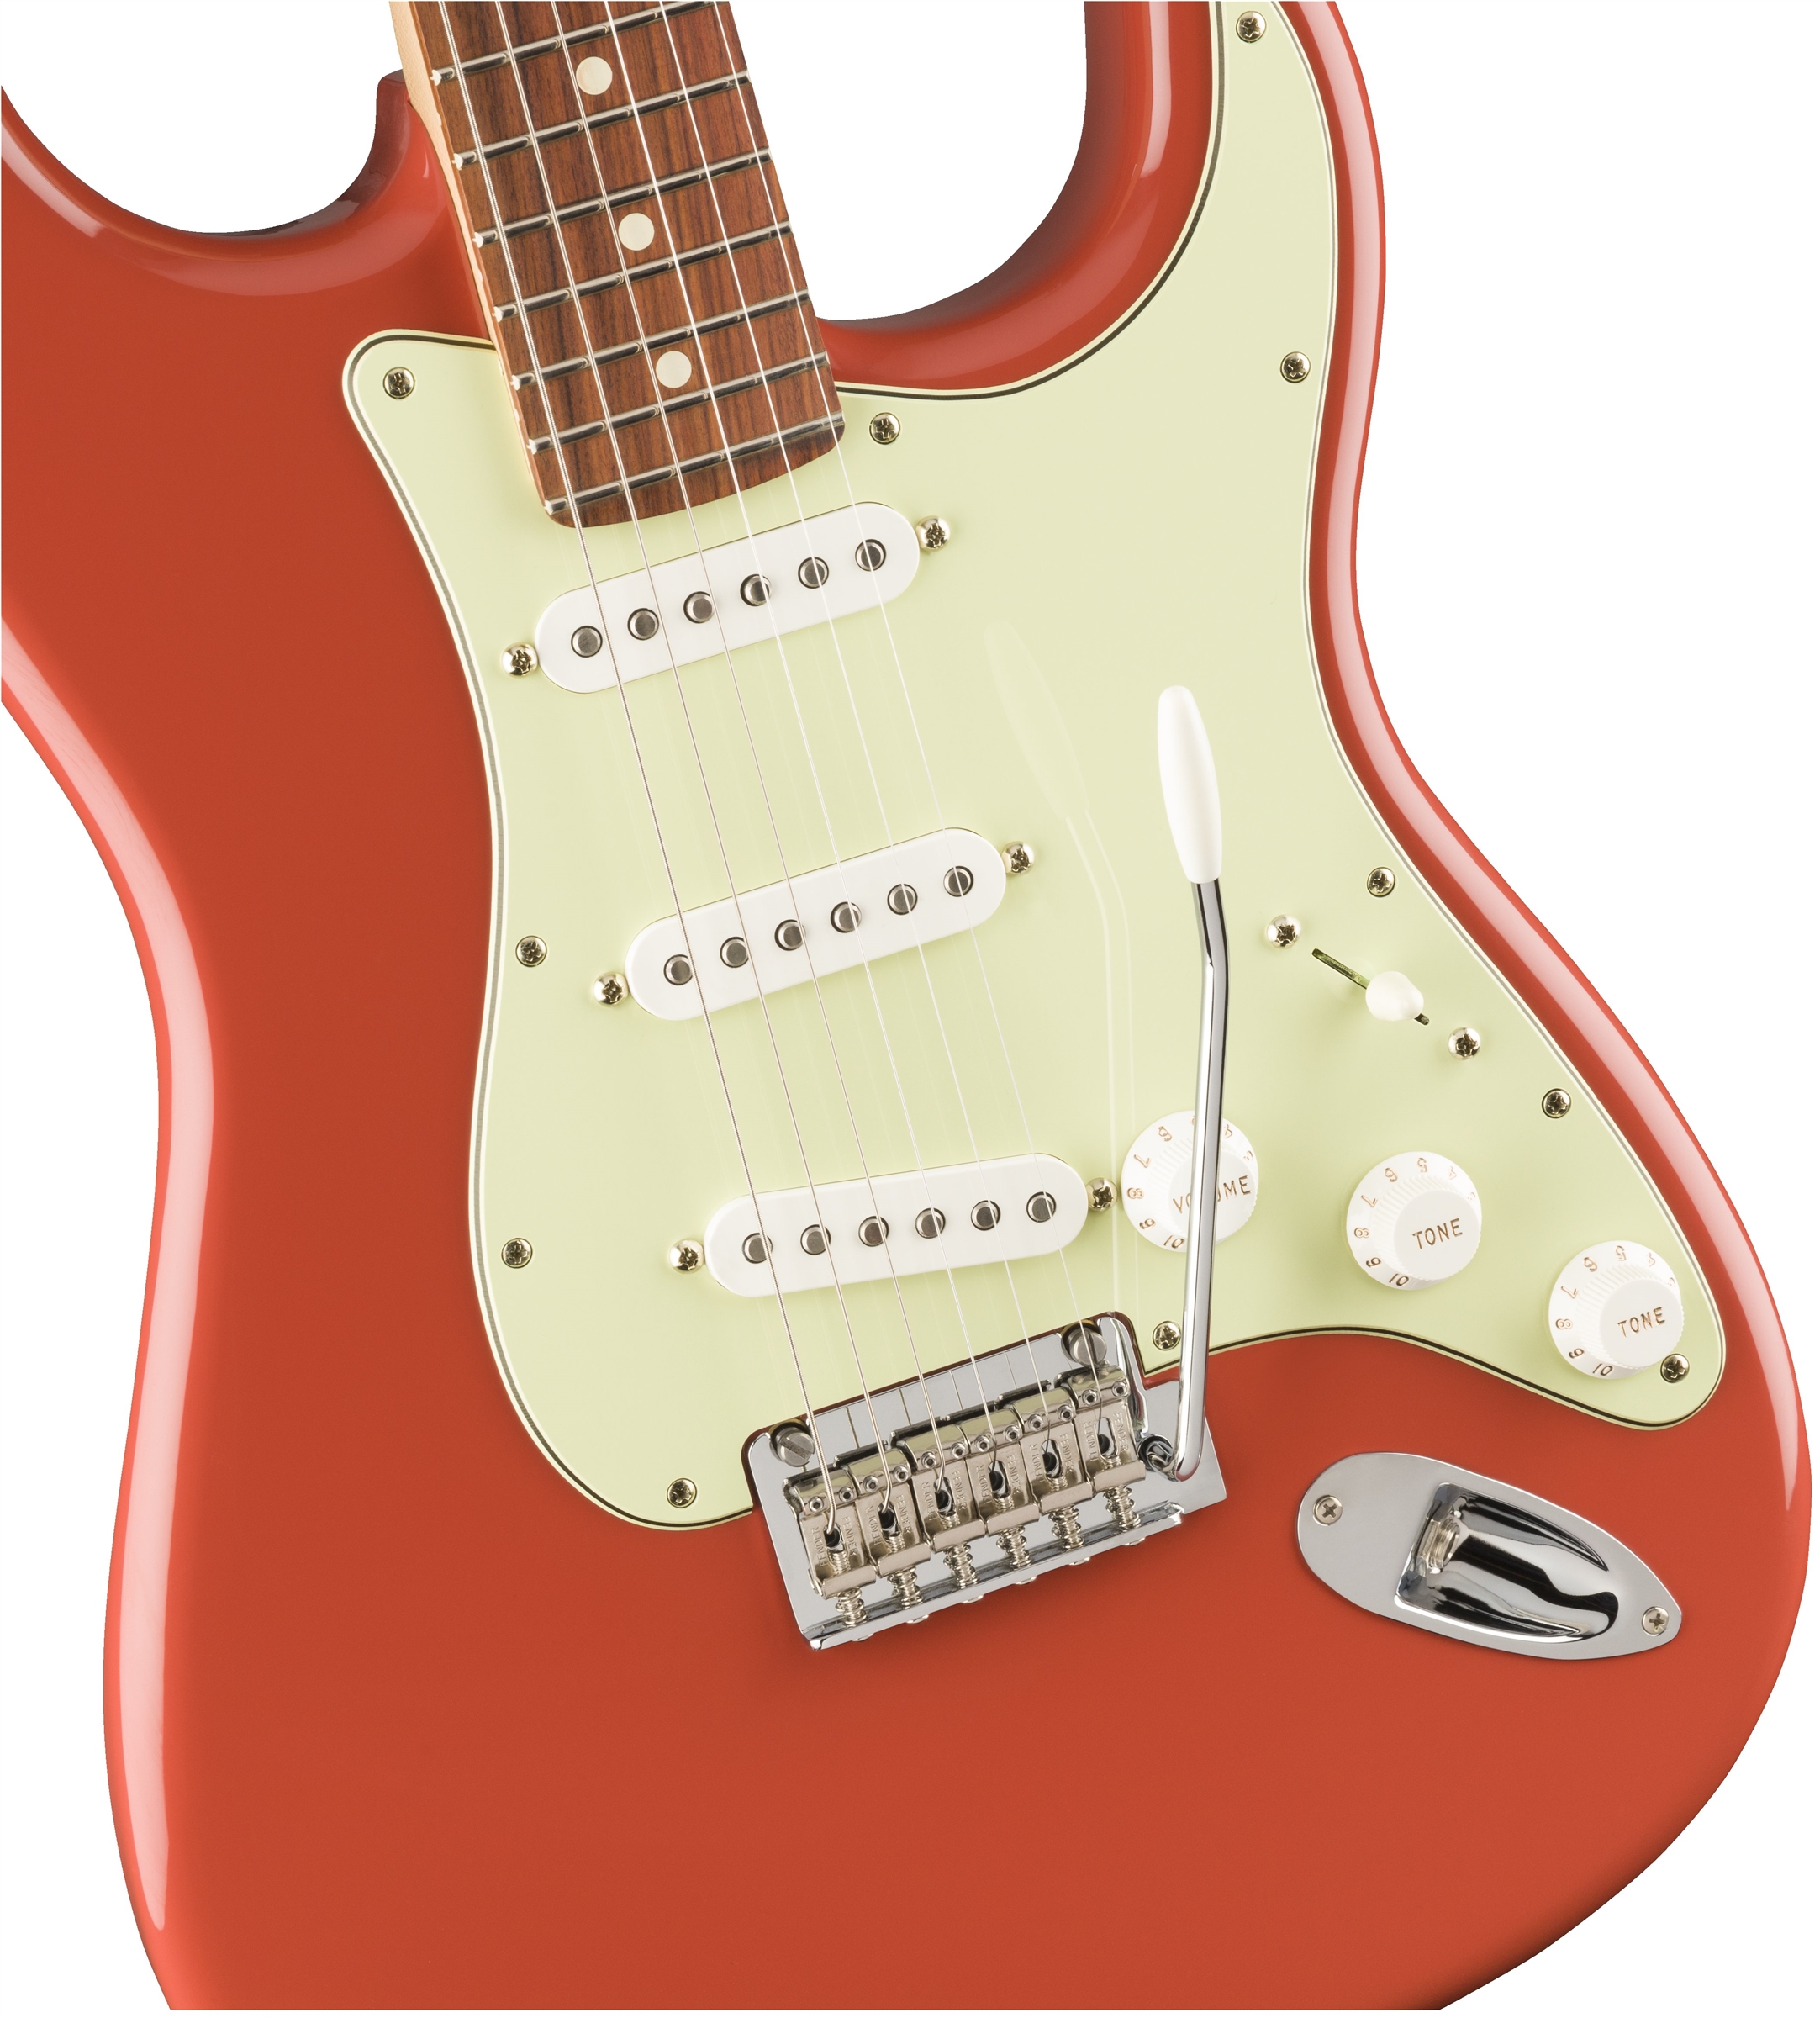 Fender Strat Player Ltd Mex 3s Trem Pf - Fiesta Red - Guitarra eléctrica con forma de str. - Variation 2